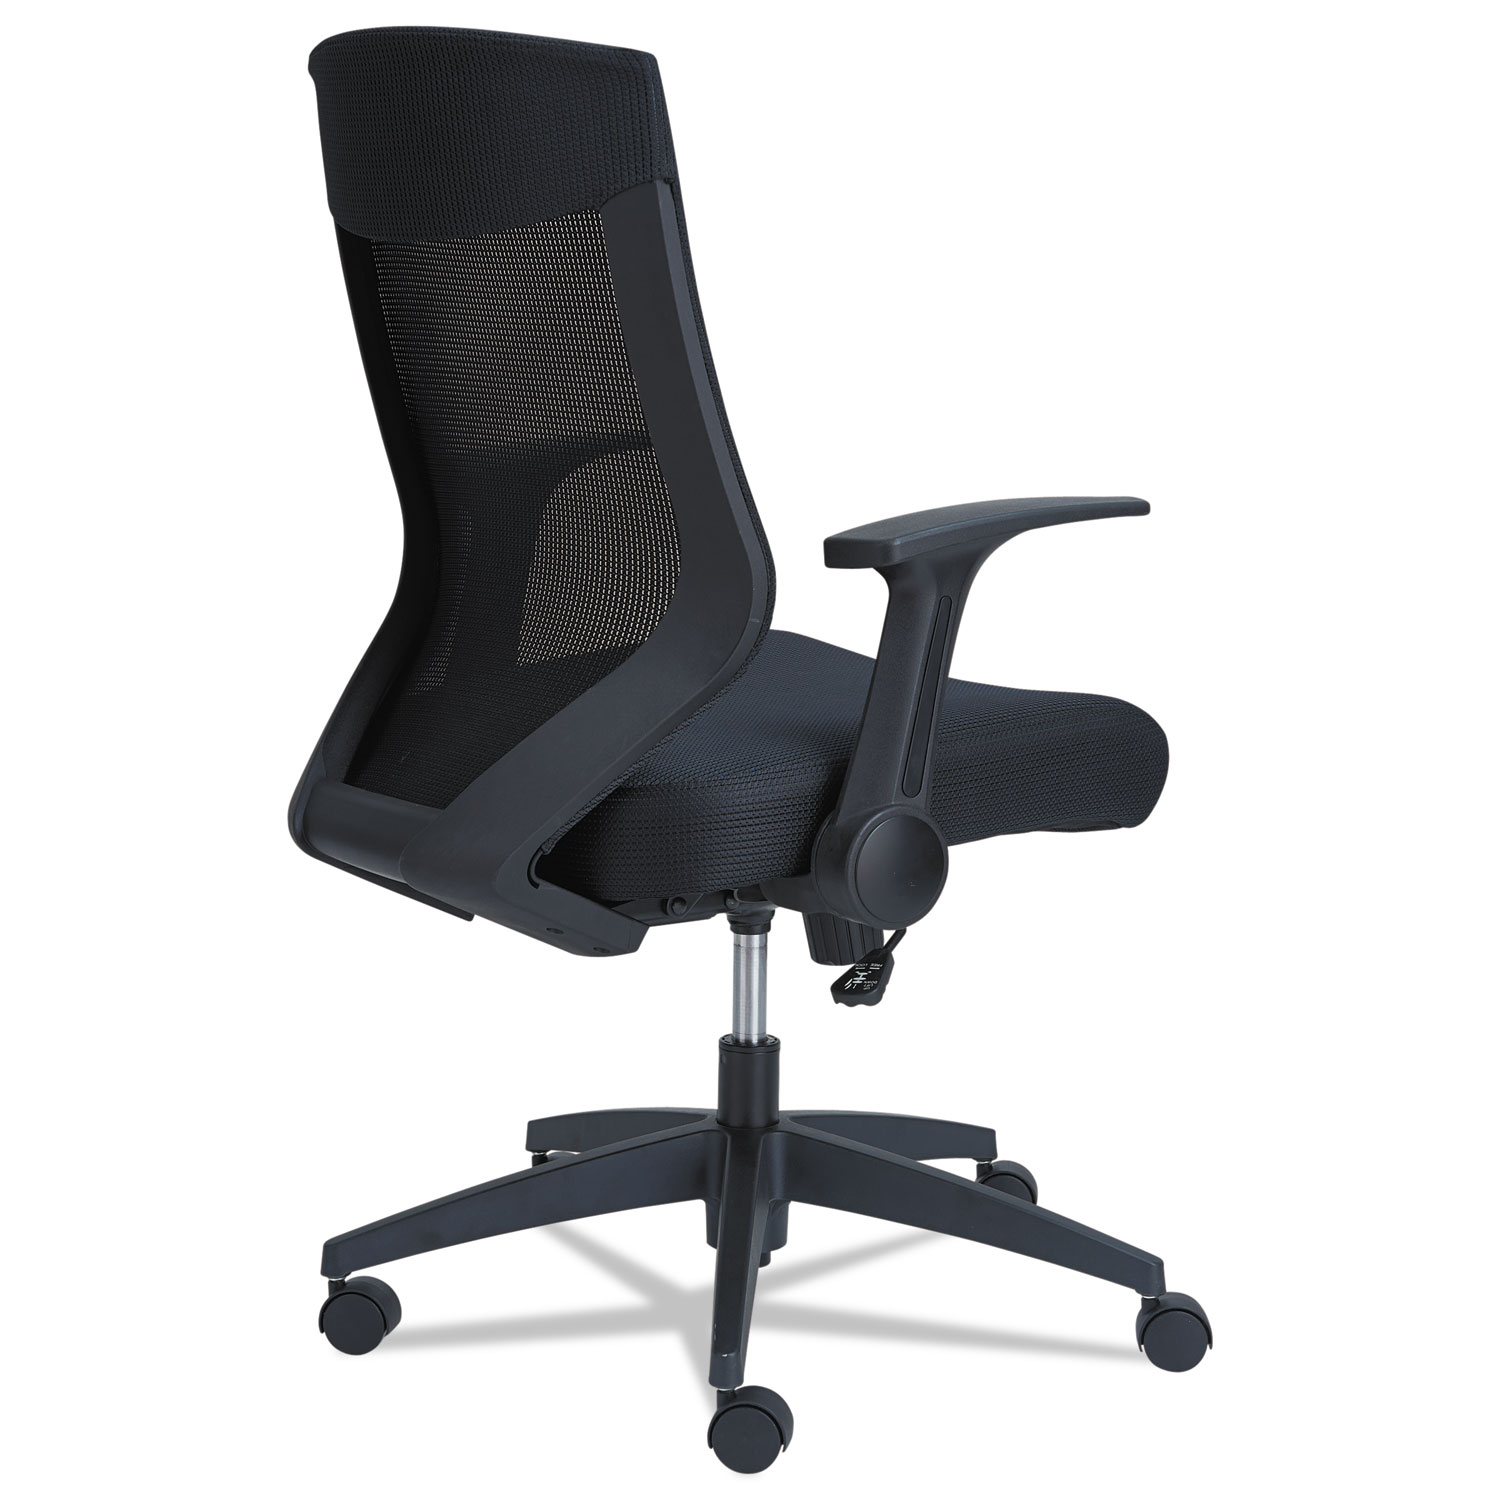 Alera EB-K Series Synchro Mid-Back Flip Arm Mesh-Chair, Supports up to 275 lbs., Black Seat/Black Back, Black Base